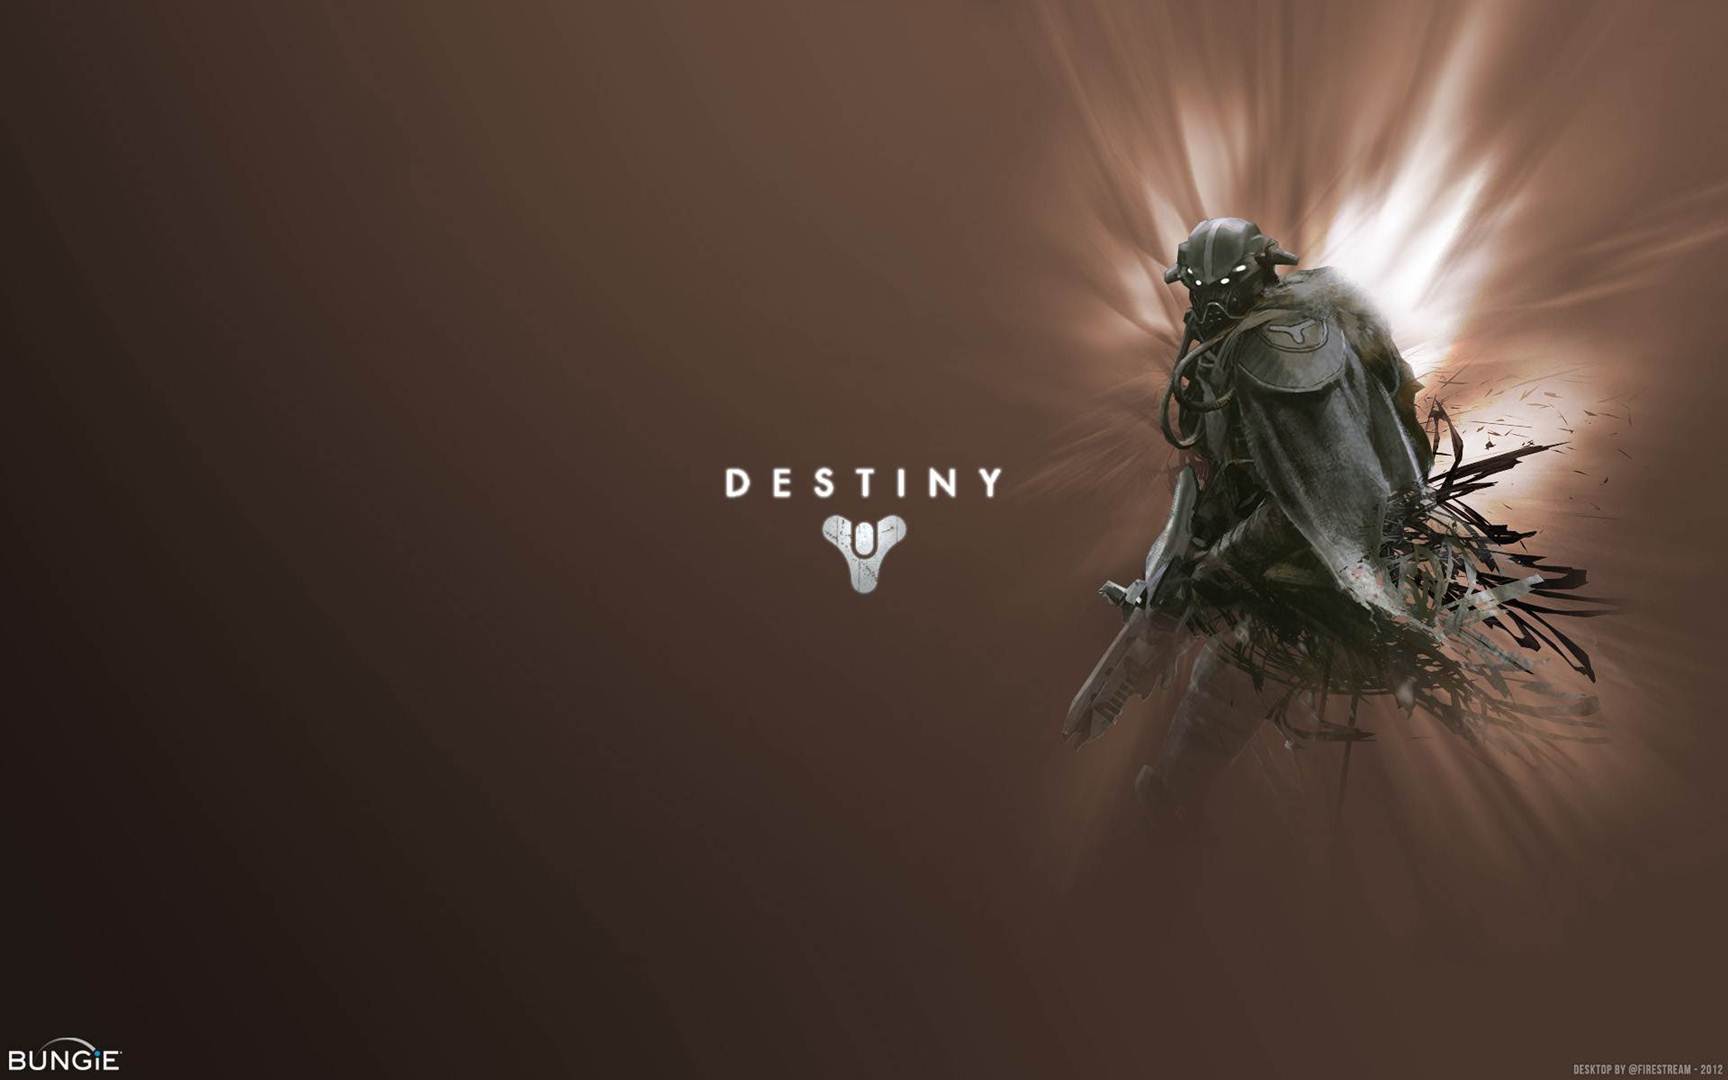 Destiny HD Wallpaper. TanukinoSippo